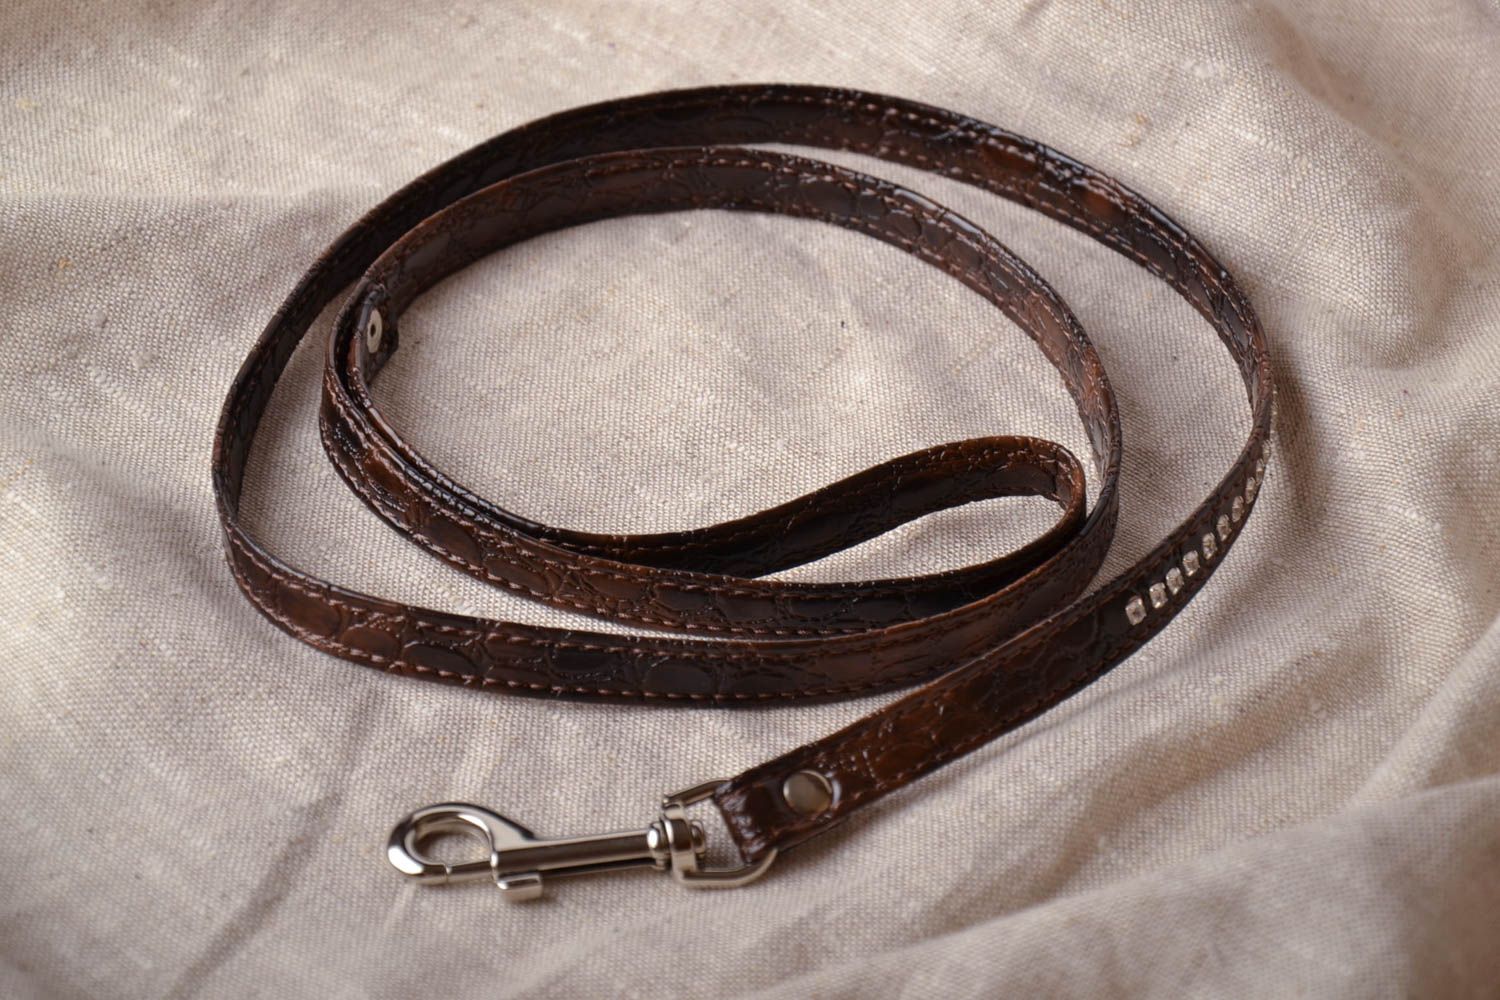 Homemade leash for pets photo 1